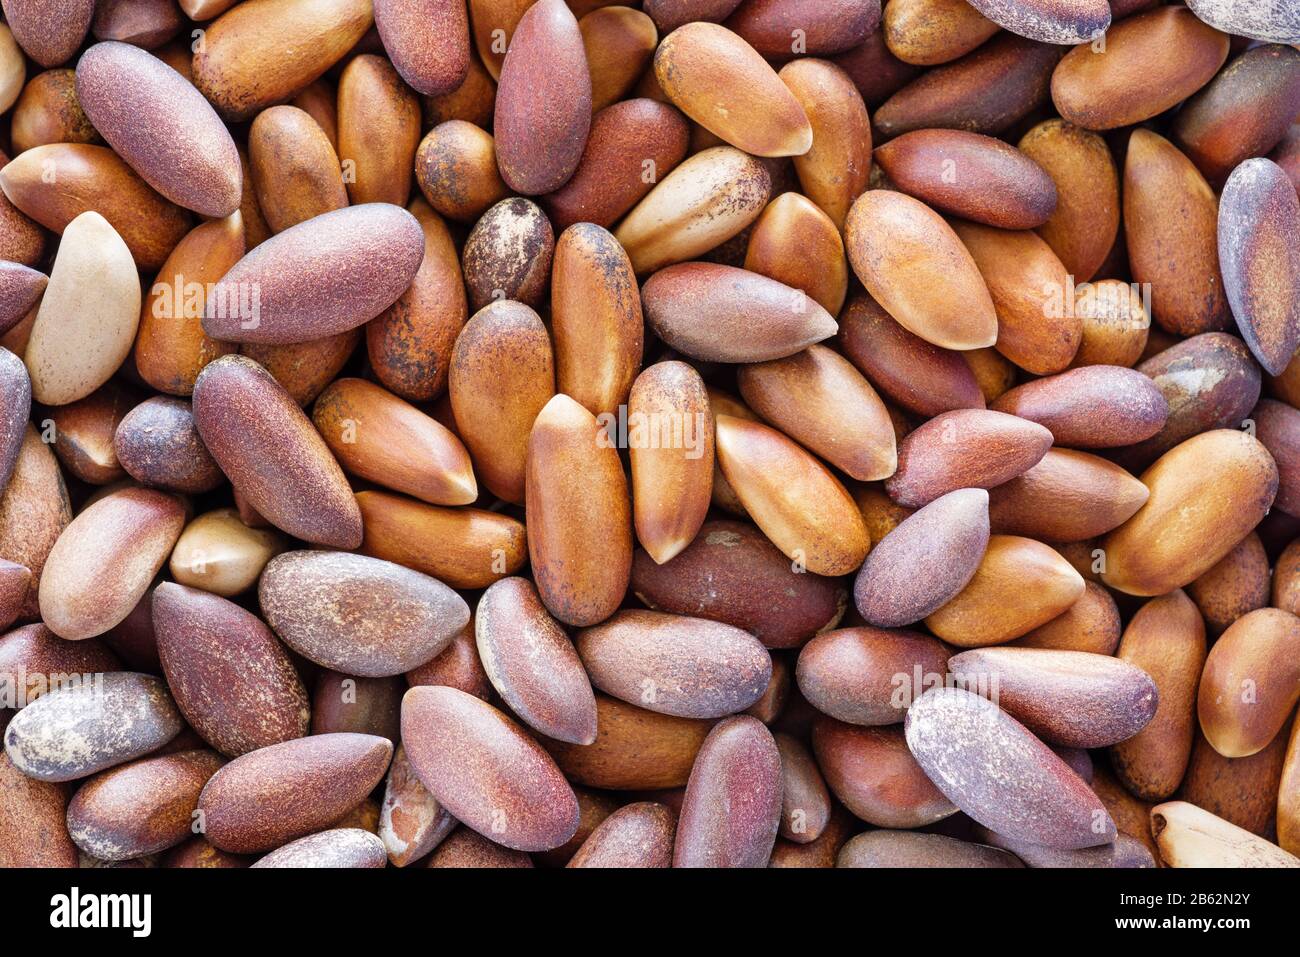 background of unshelled pine nut seeds Stock Photo